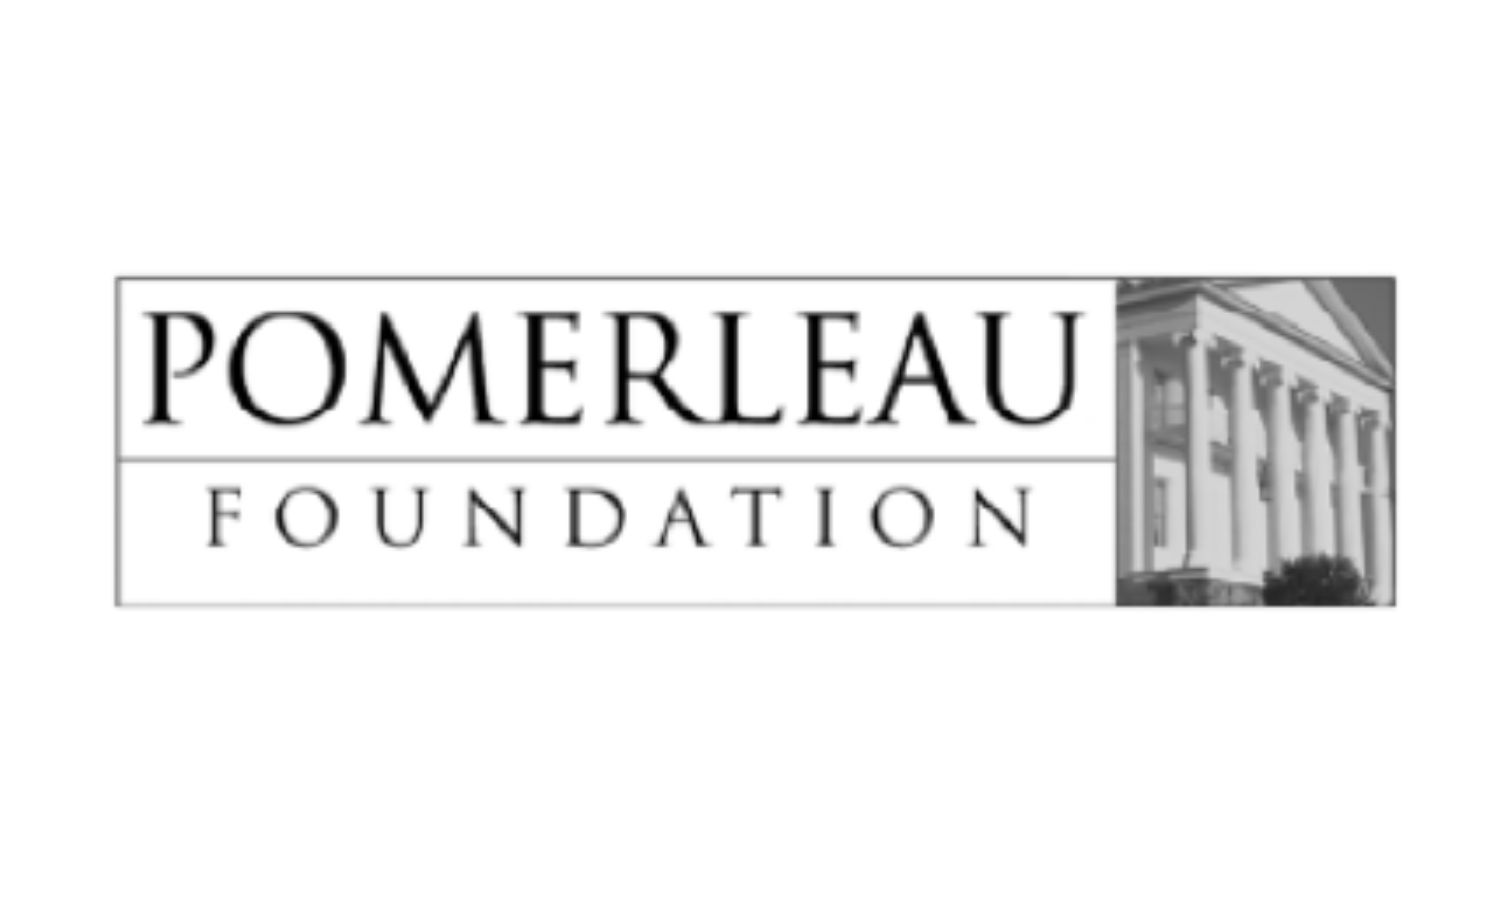 3. Pomerleau Foundation (Tier 2)